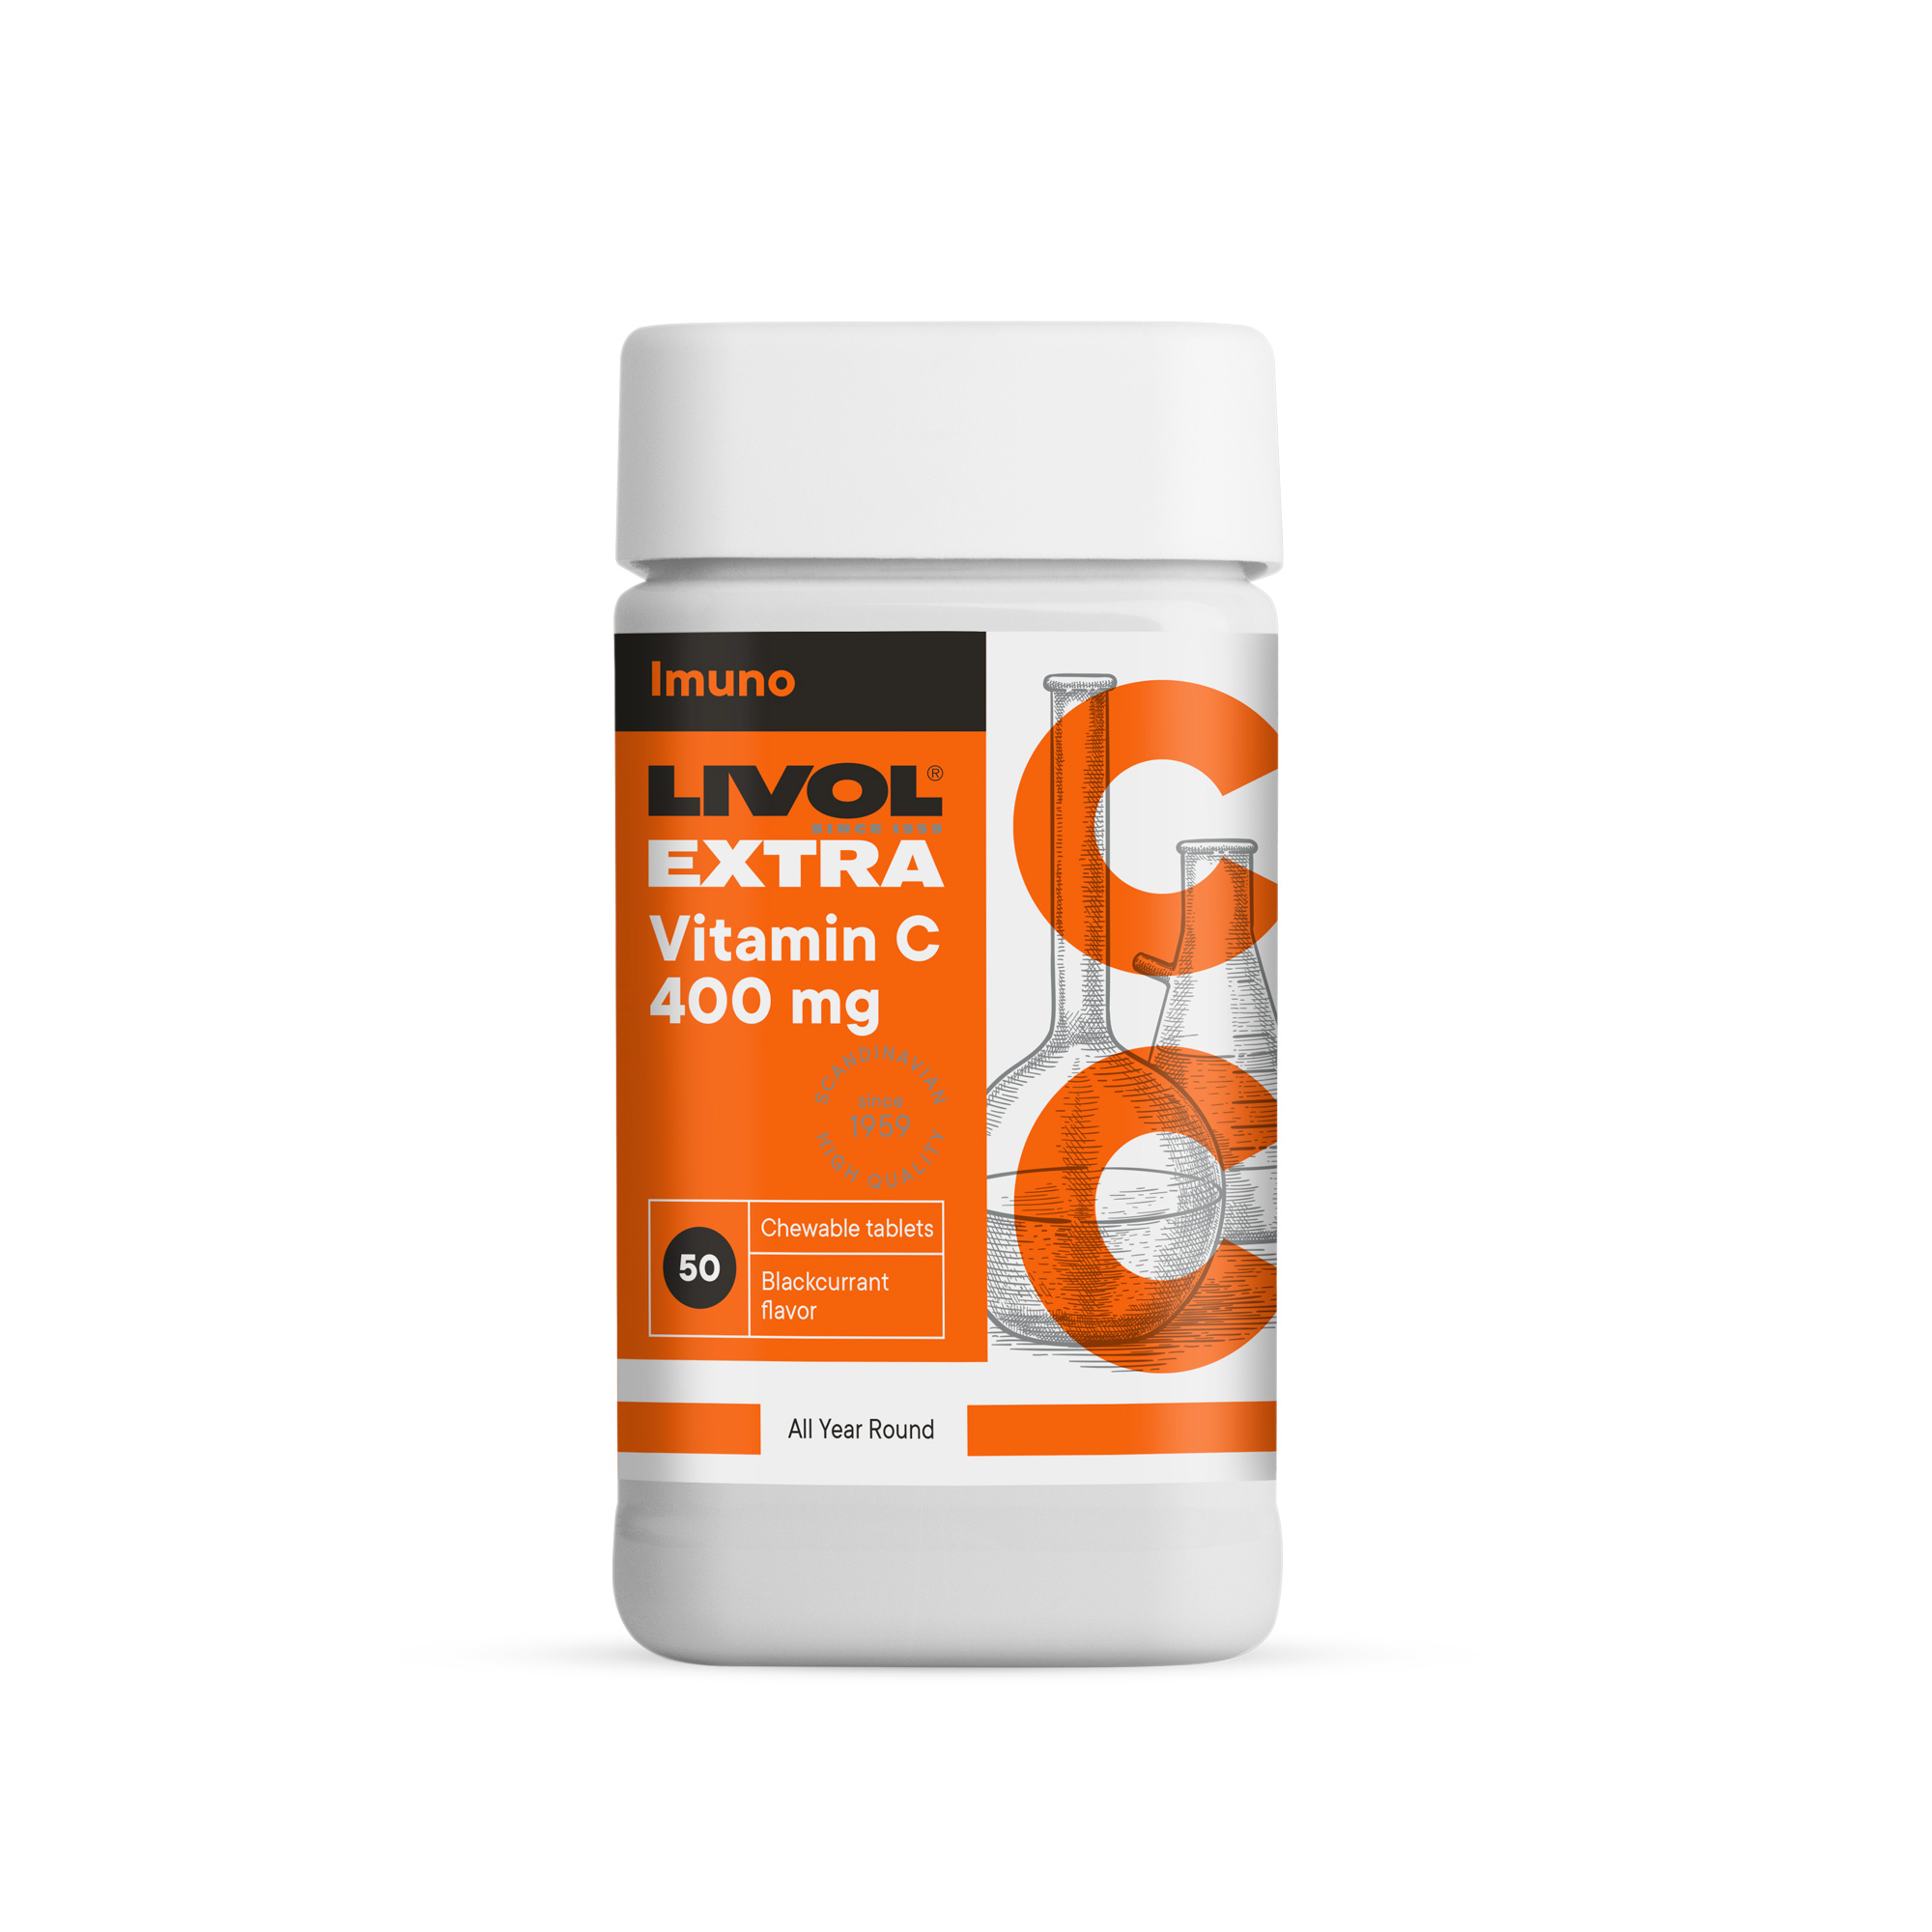 LIVOL EXTRA Vitamin C 400 mg